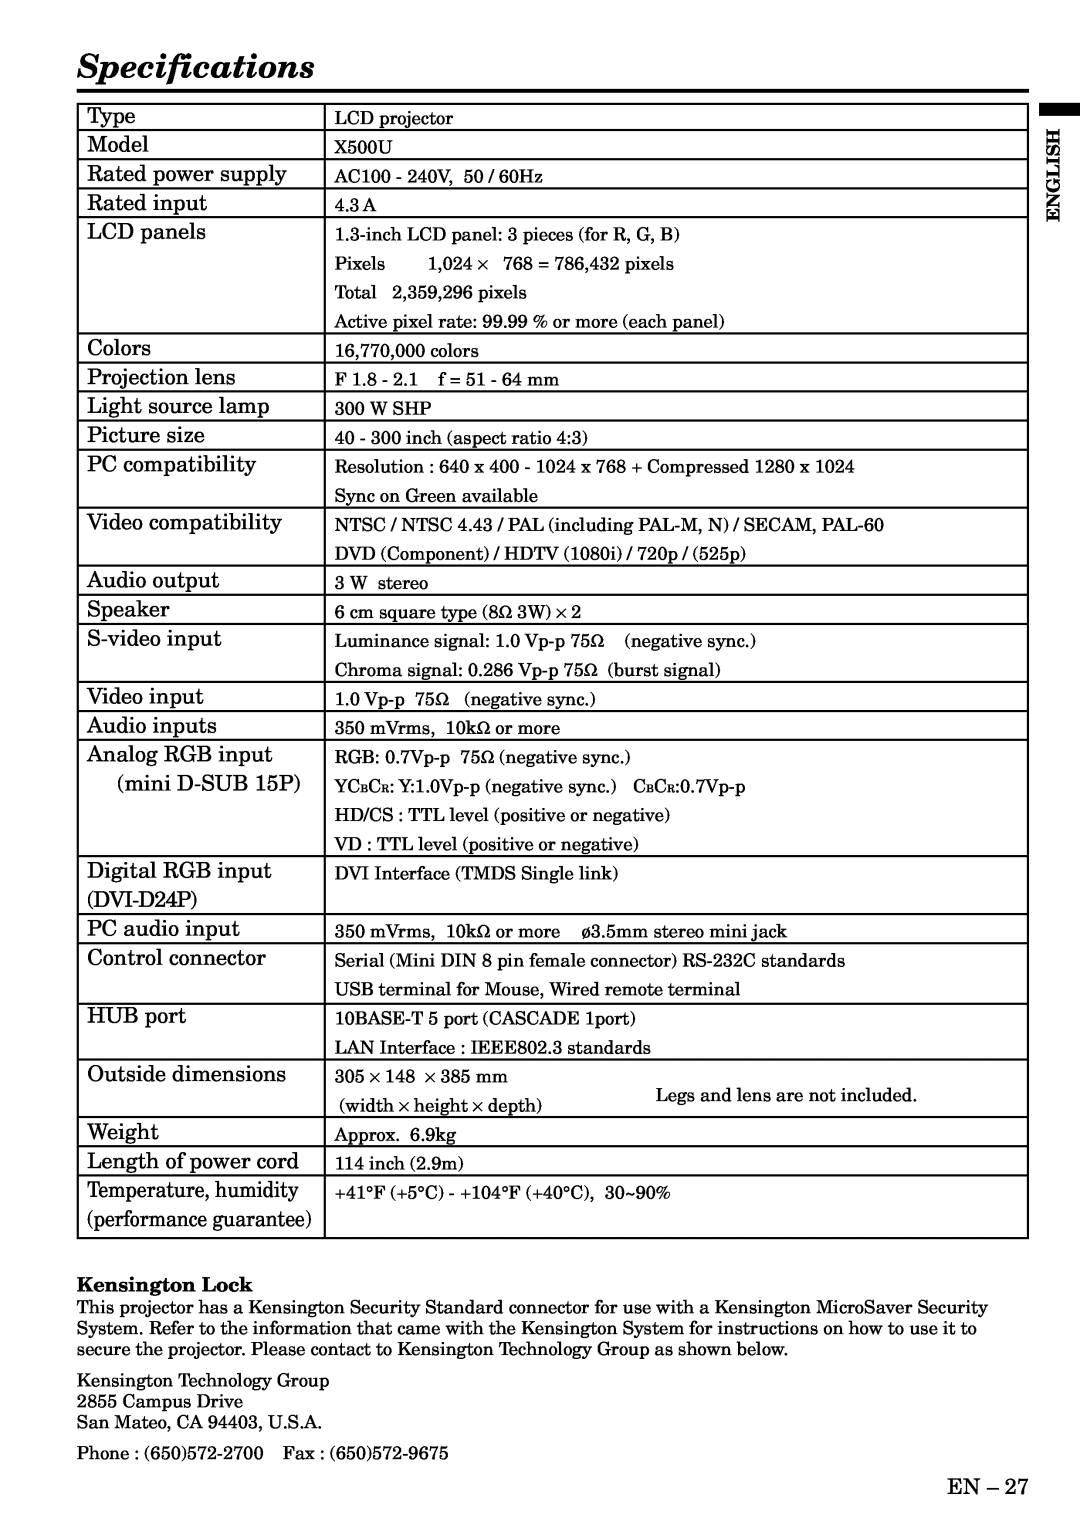 Mitsubishi Electronics X500U user manual Specifications, Kensington Lock 